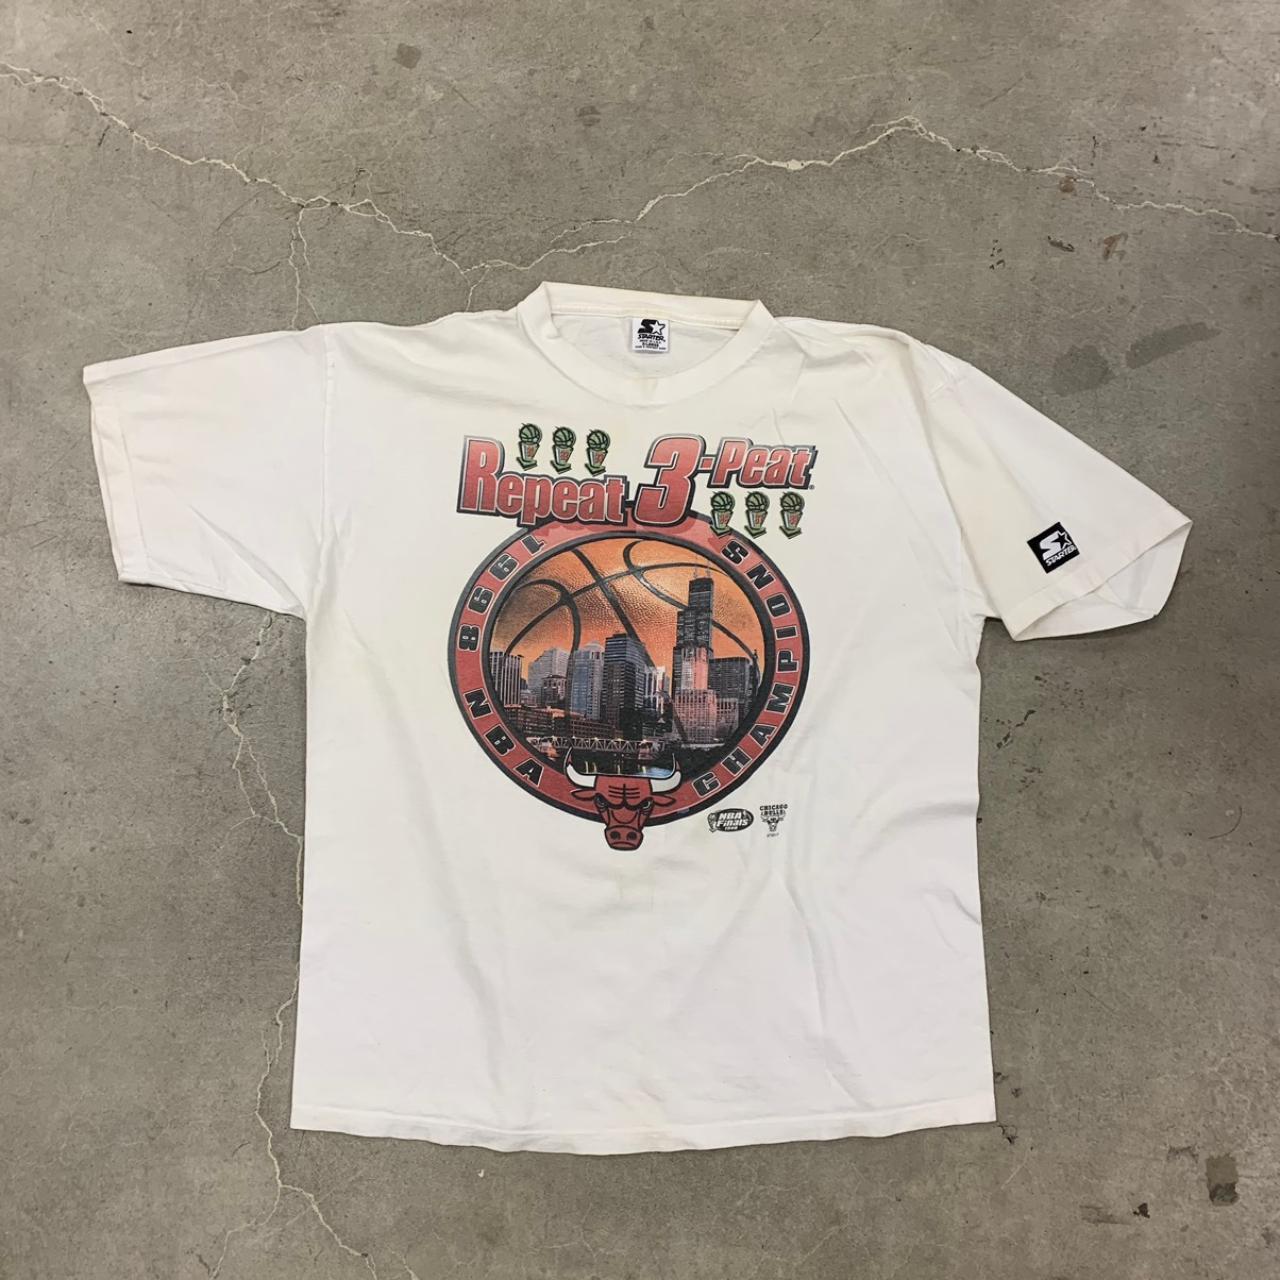 Vintage Chicago Bulls Repeat 3-Peat NBA Champion 1998 T-shirt